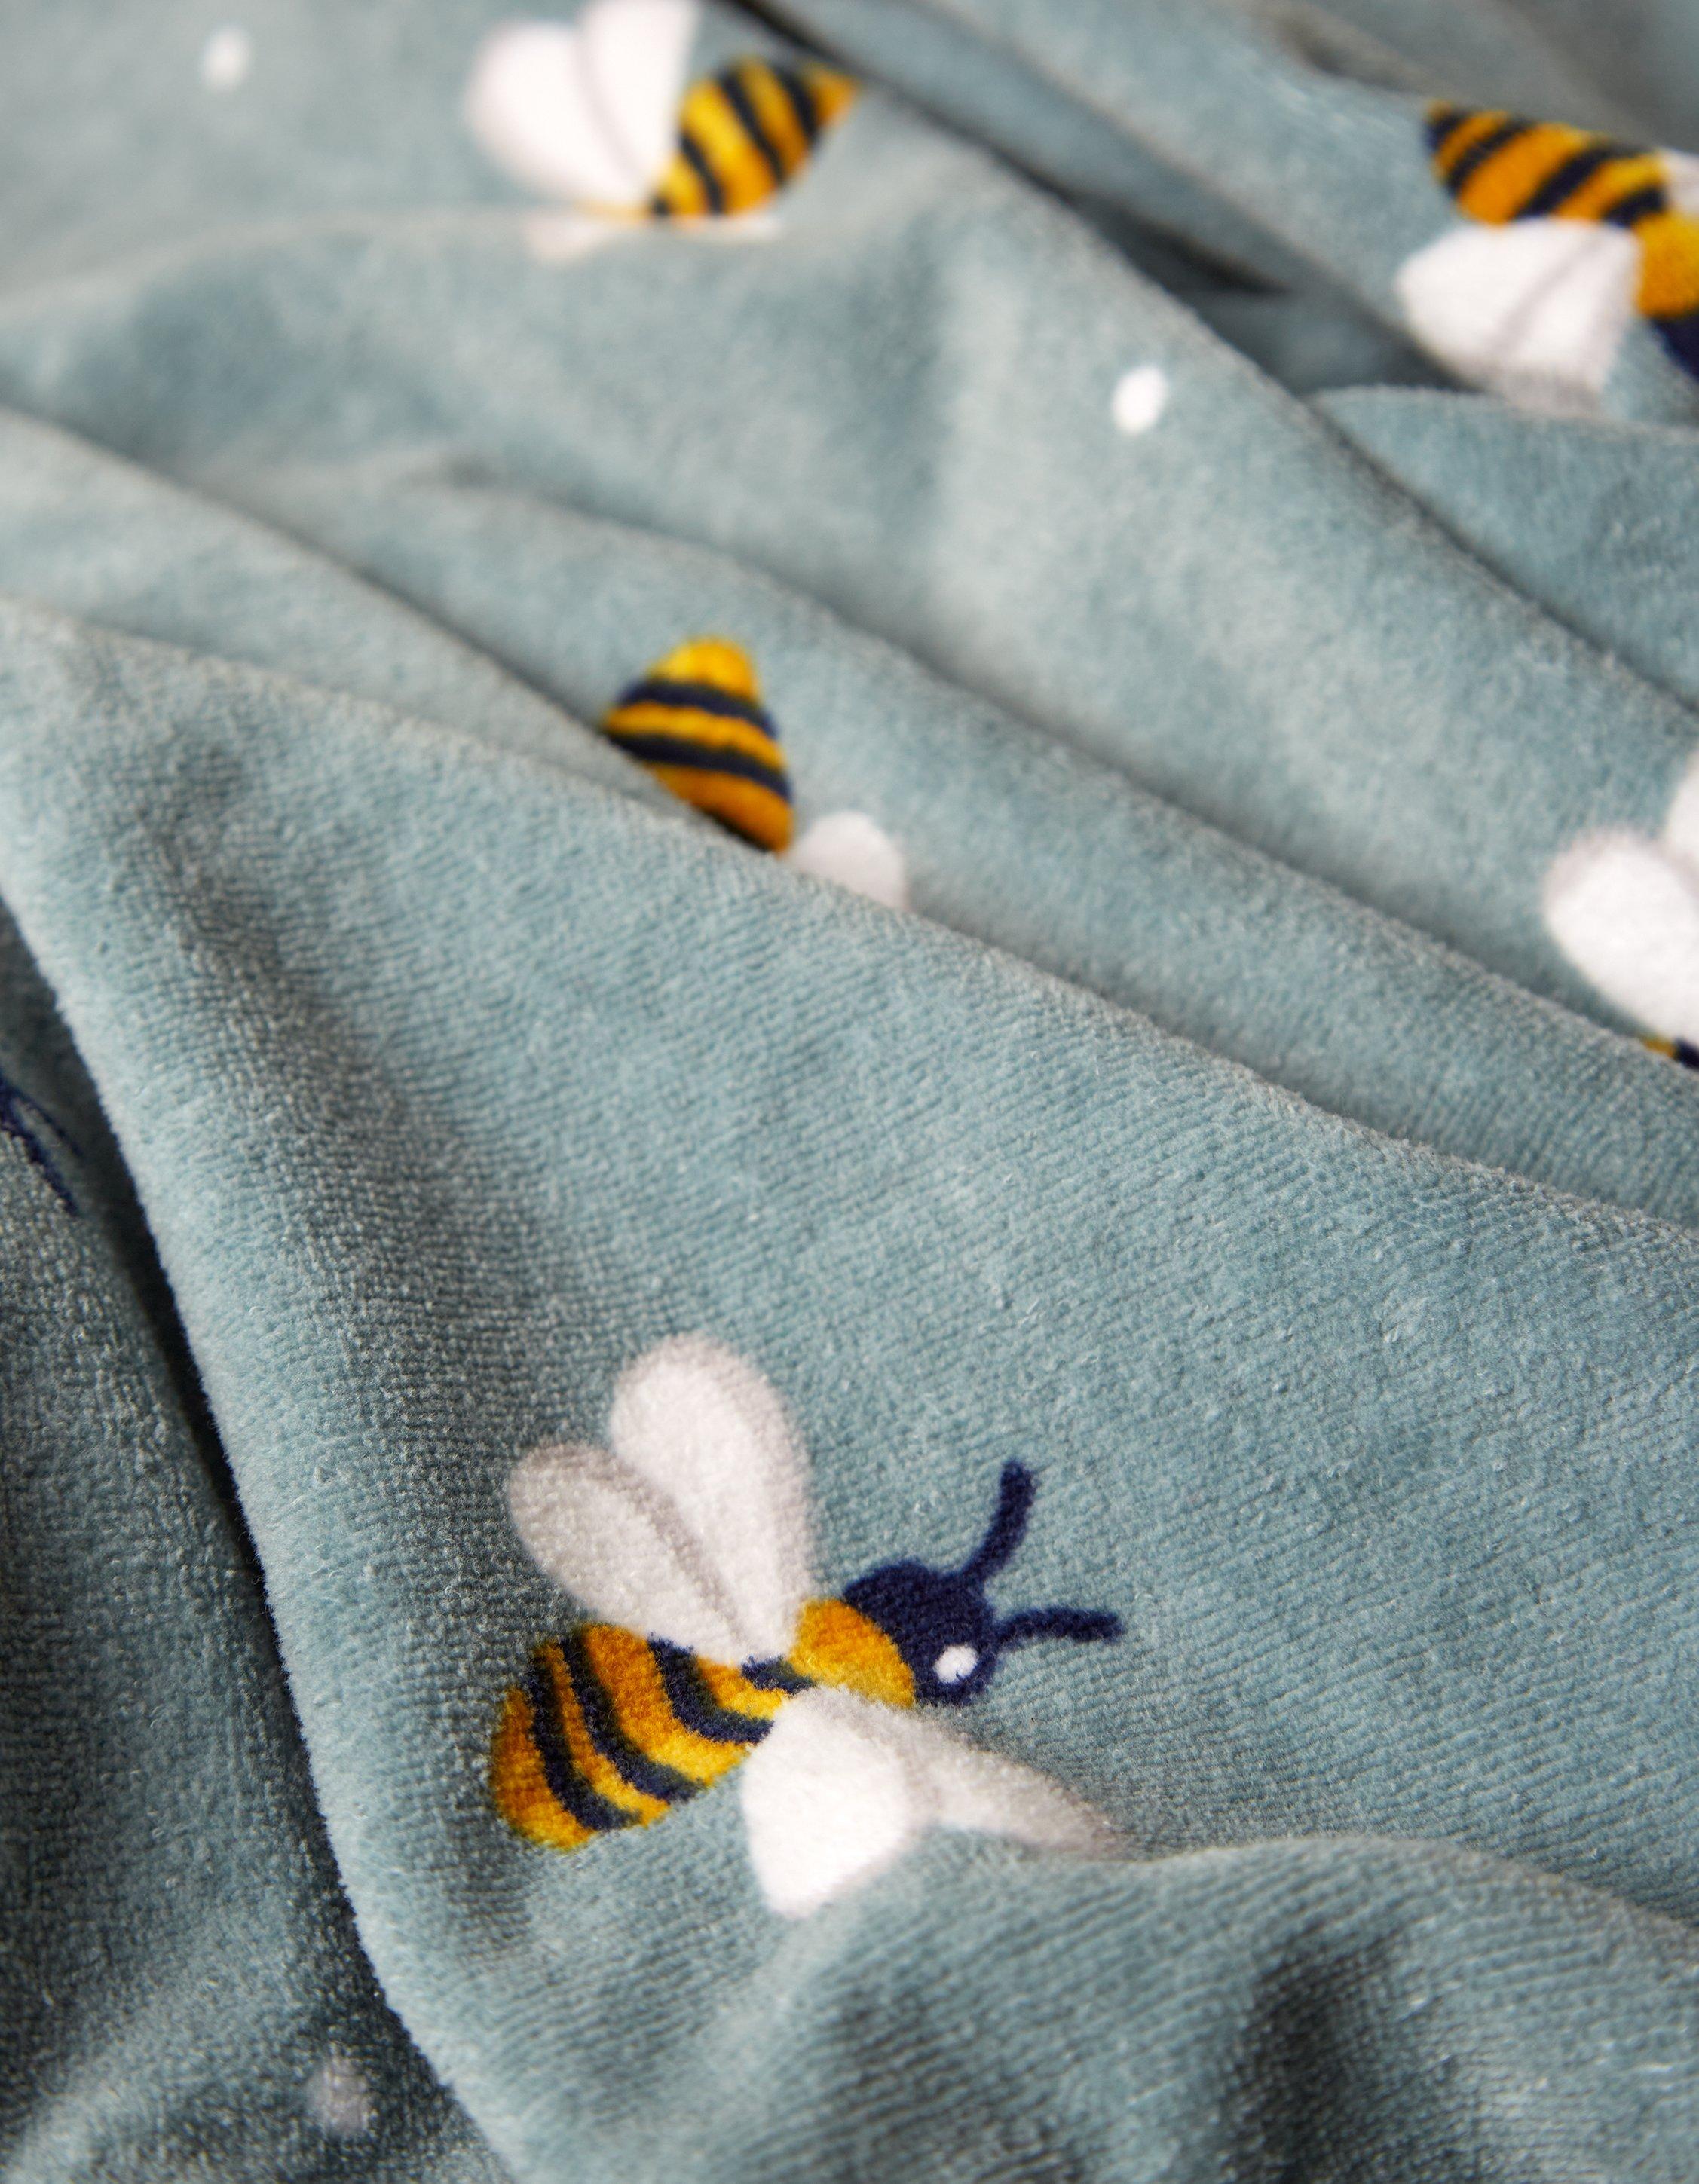 Bumble Bee Buzz Hand Towel